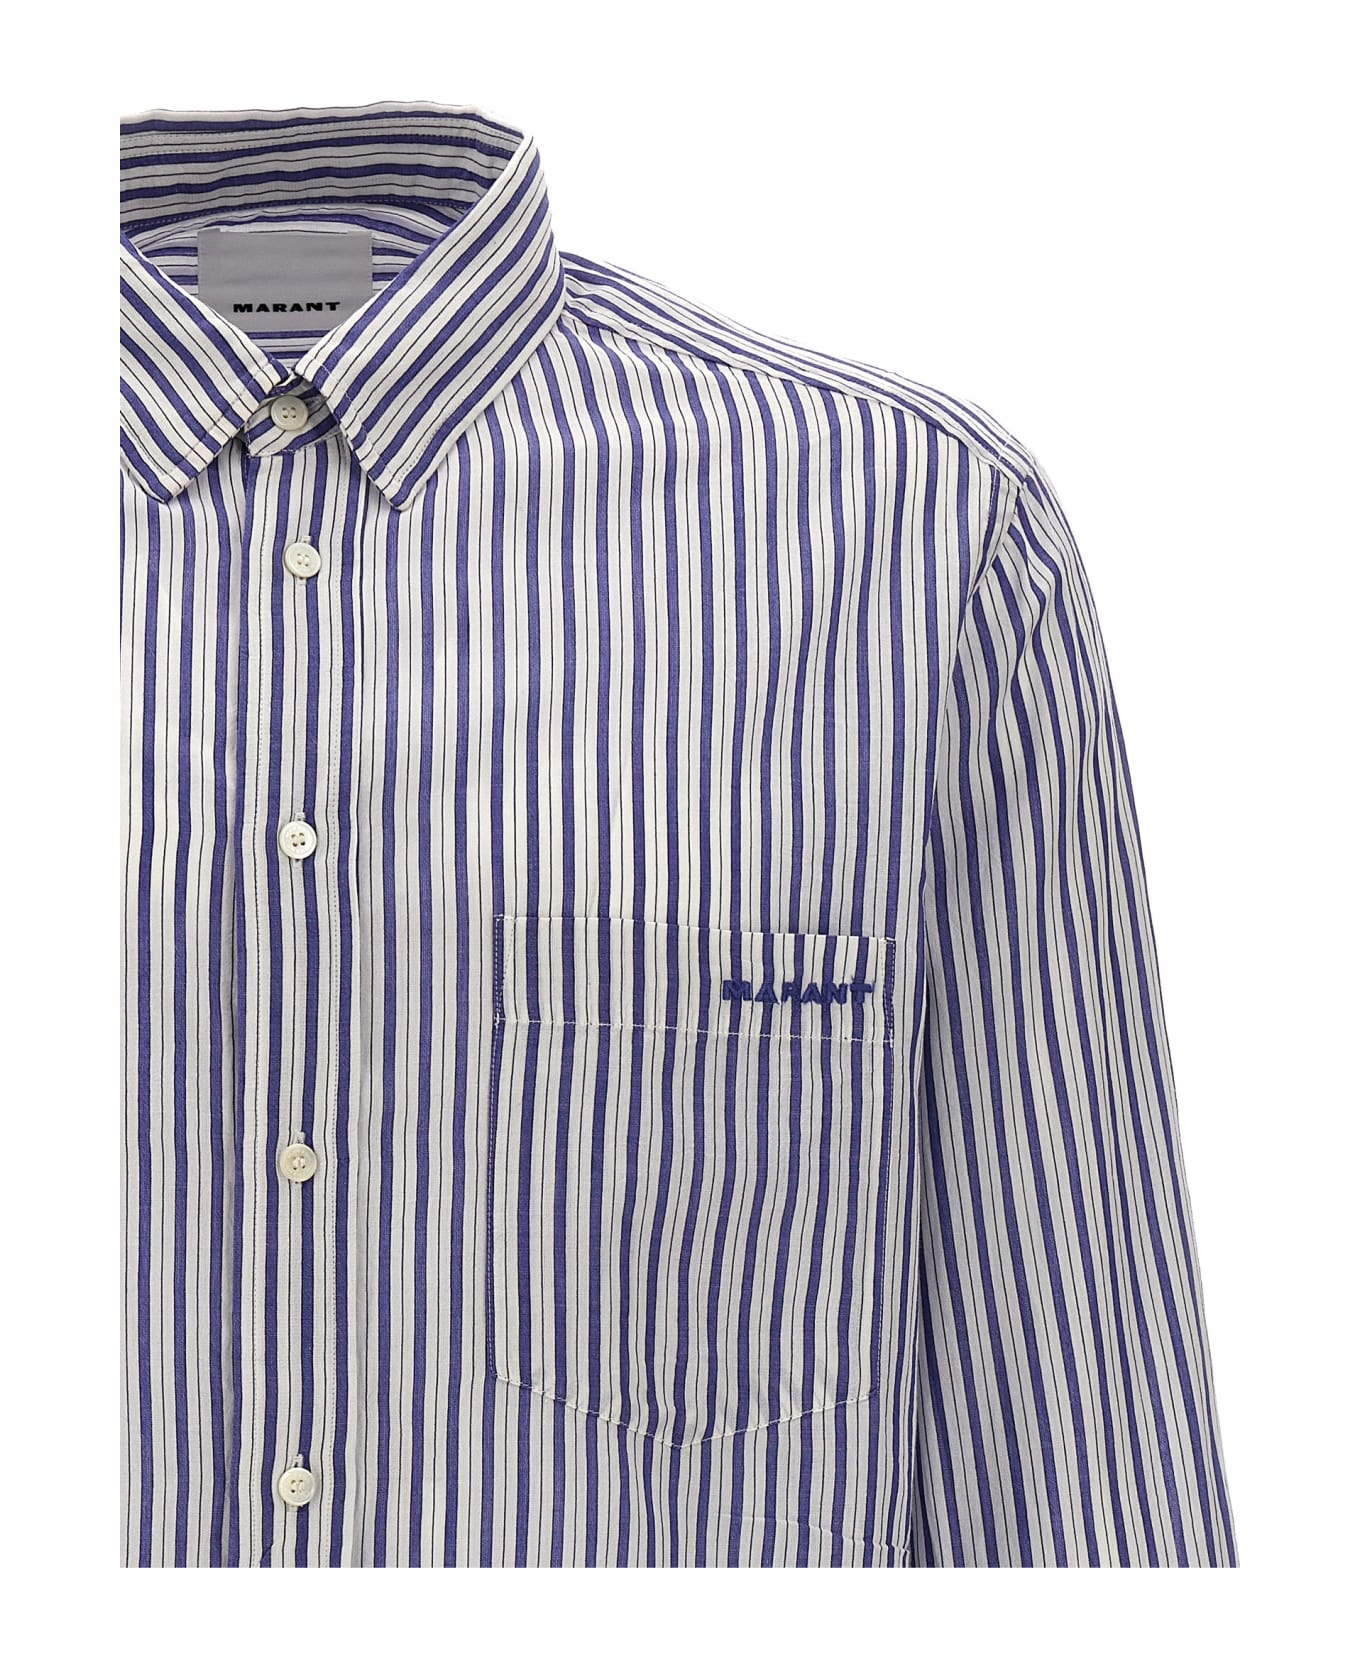 Isabel Marant Striped Shirt - Light Blue シャツ